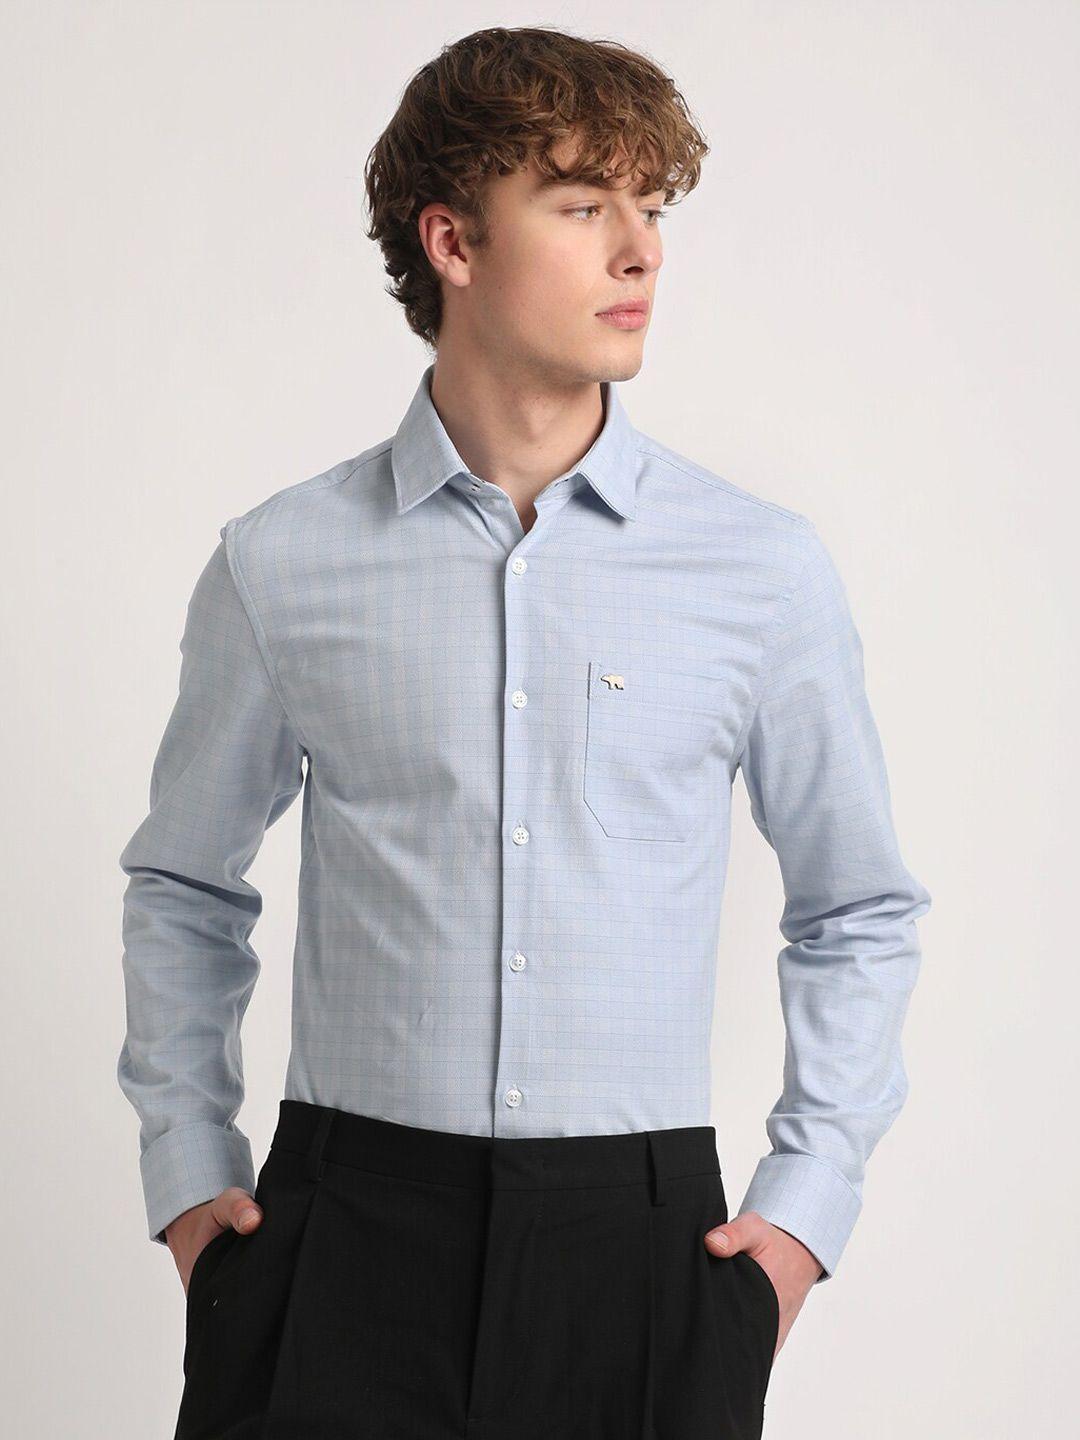 the-bear-house-slim-fit-micro-checks-spread-collar-long-sleeves-cotton-formal-shirt